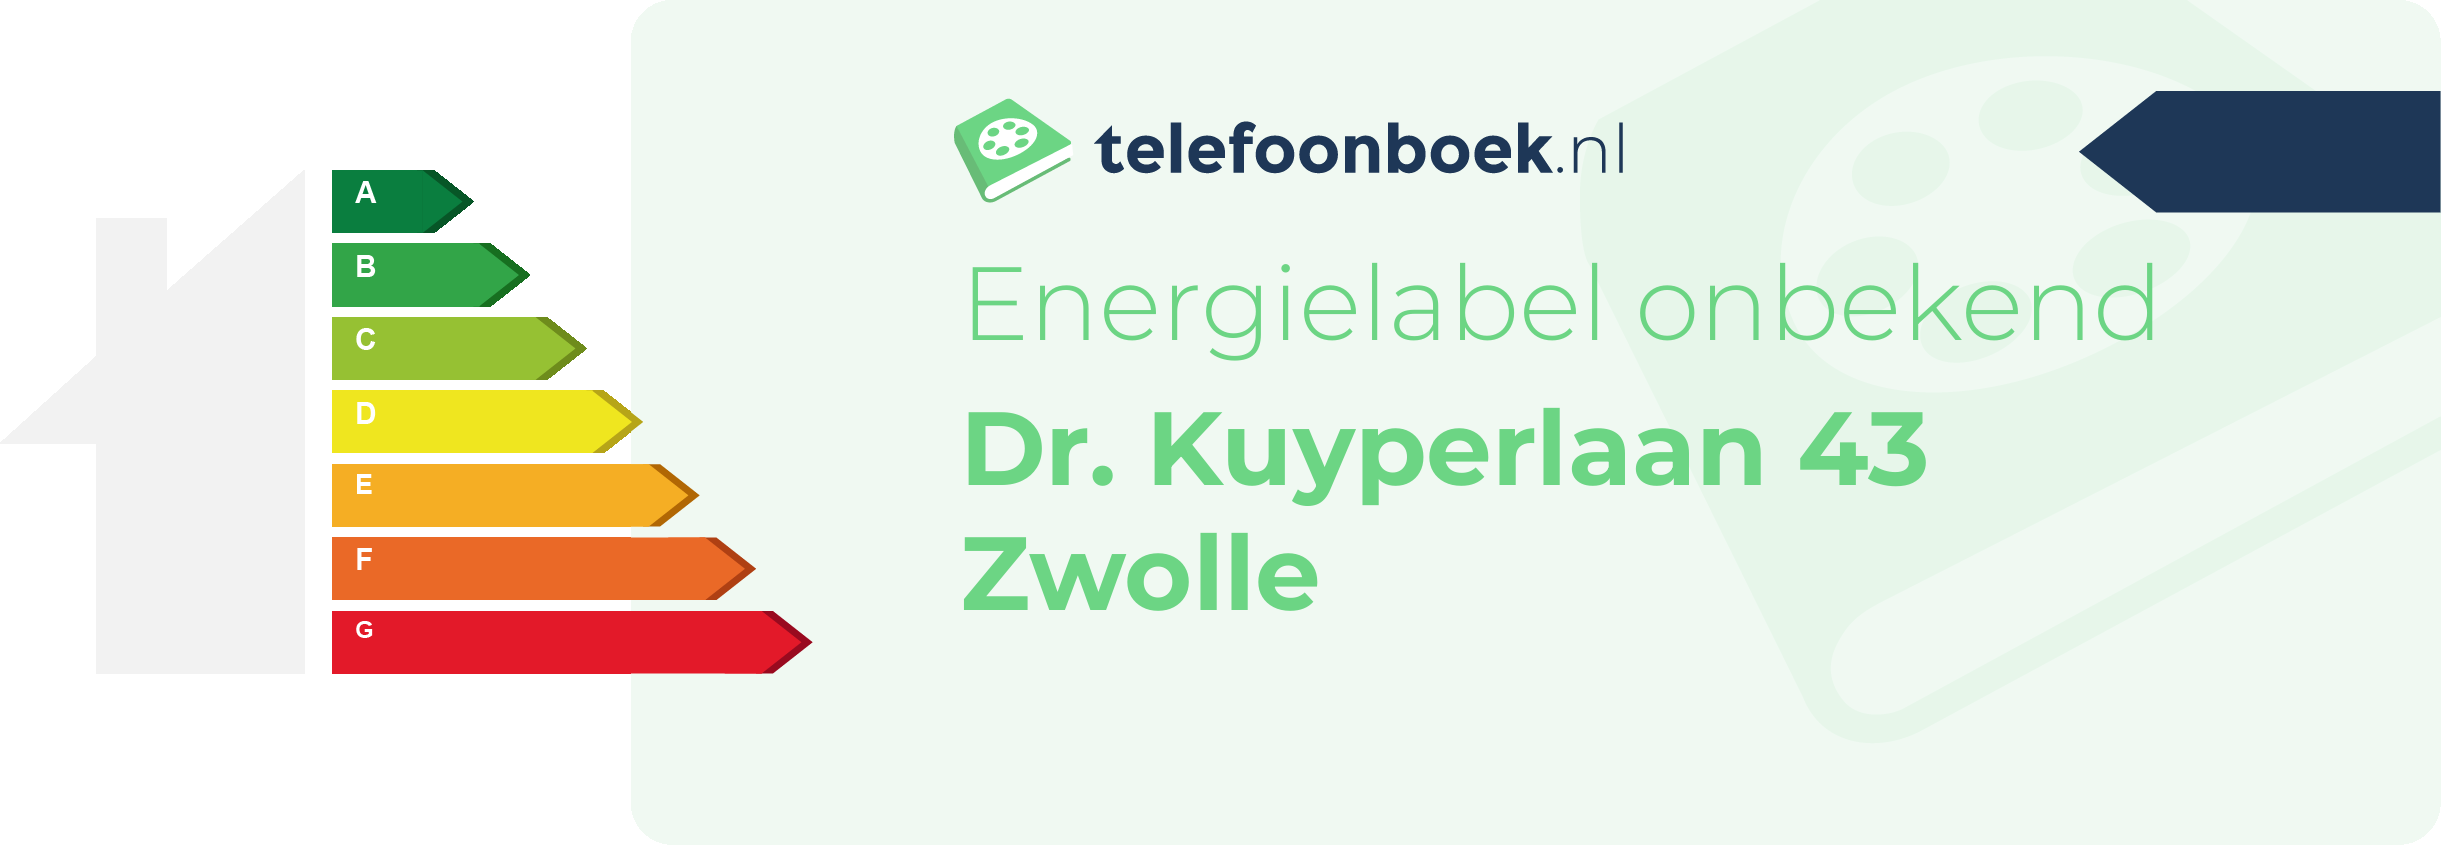 Energielabel Dr. Kuyperlaan 43 Zwolle